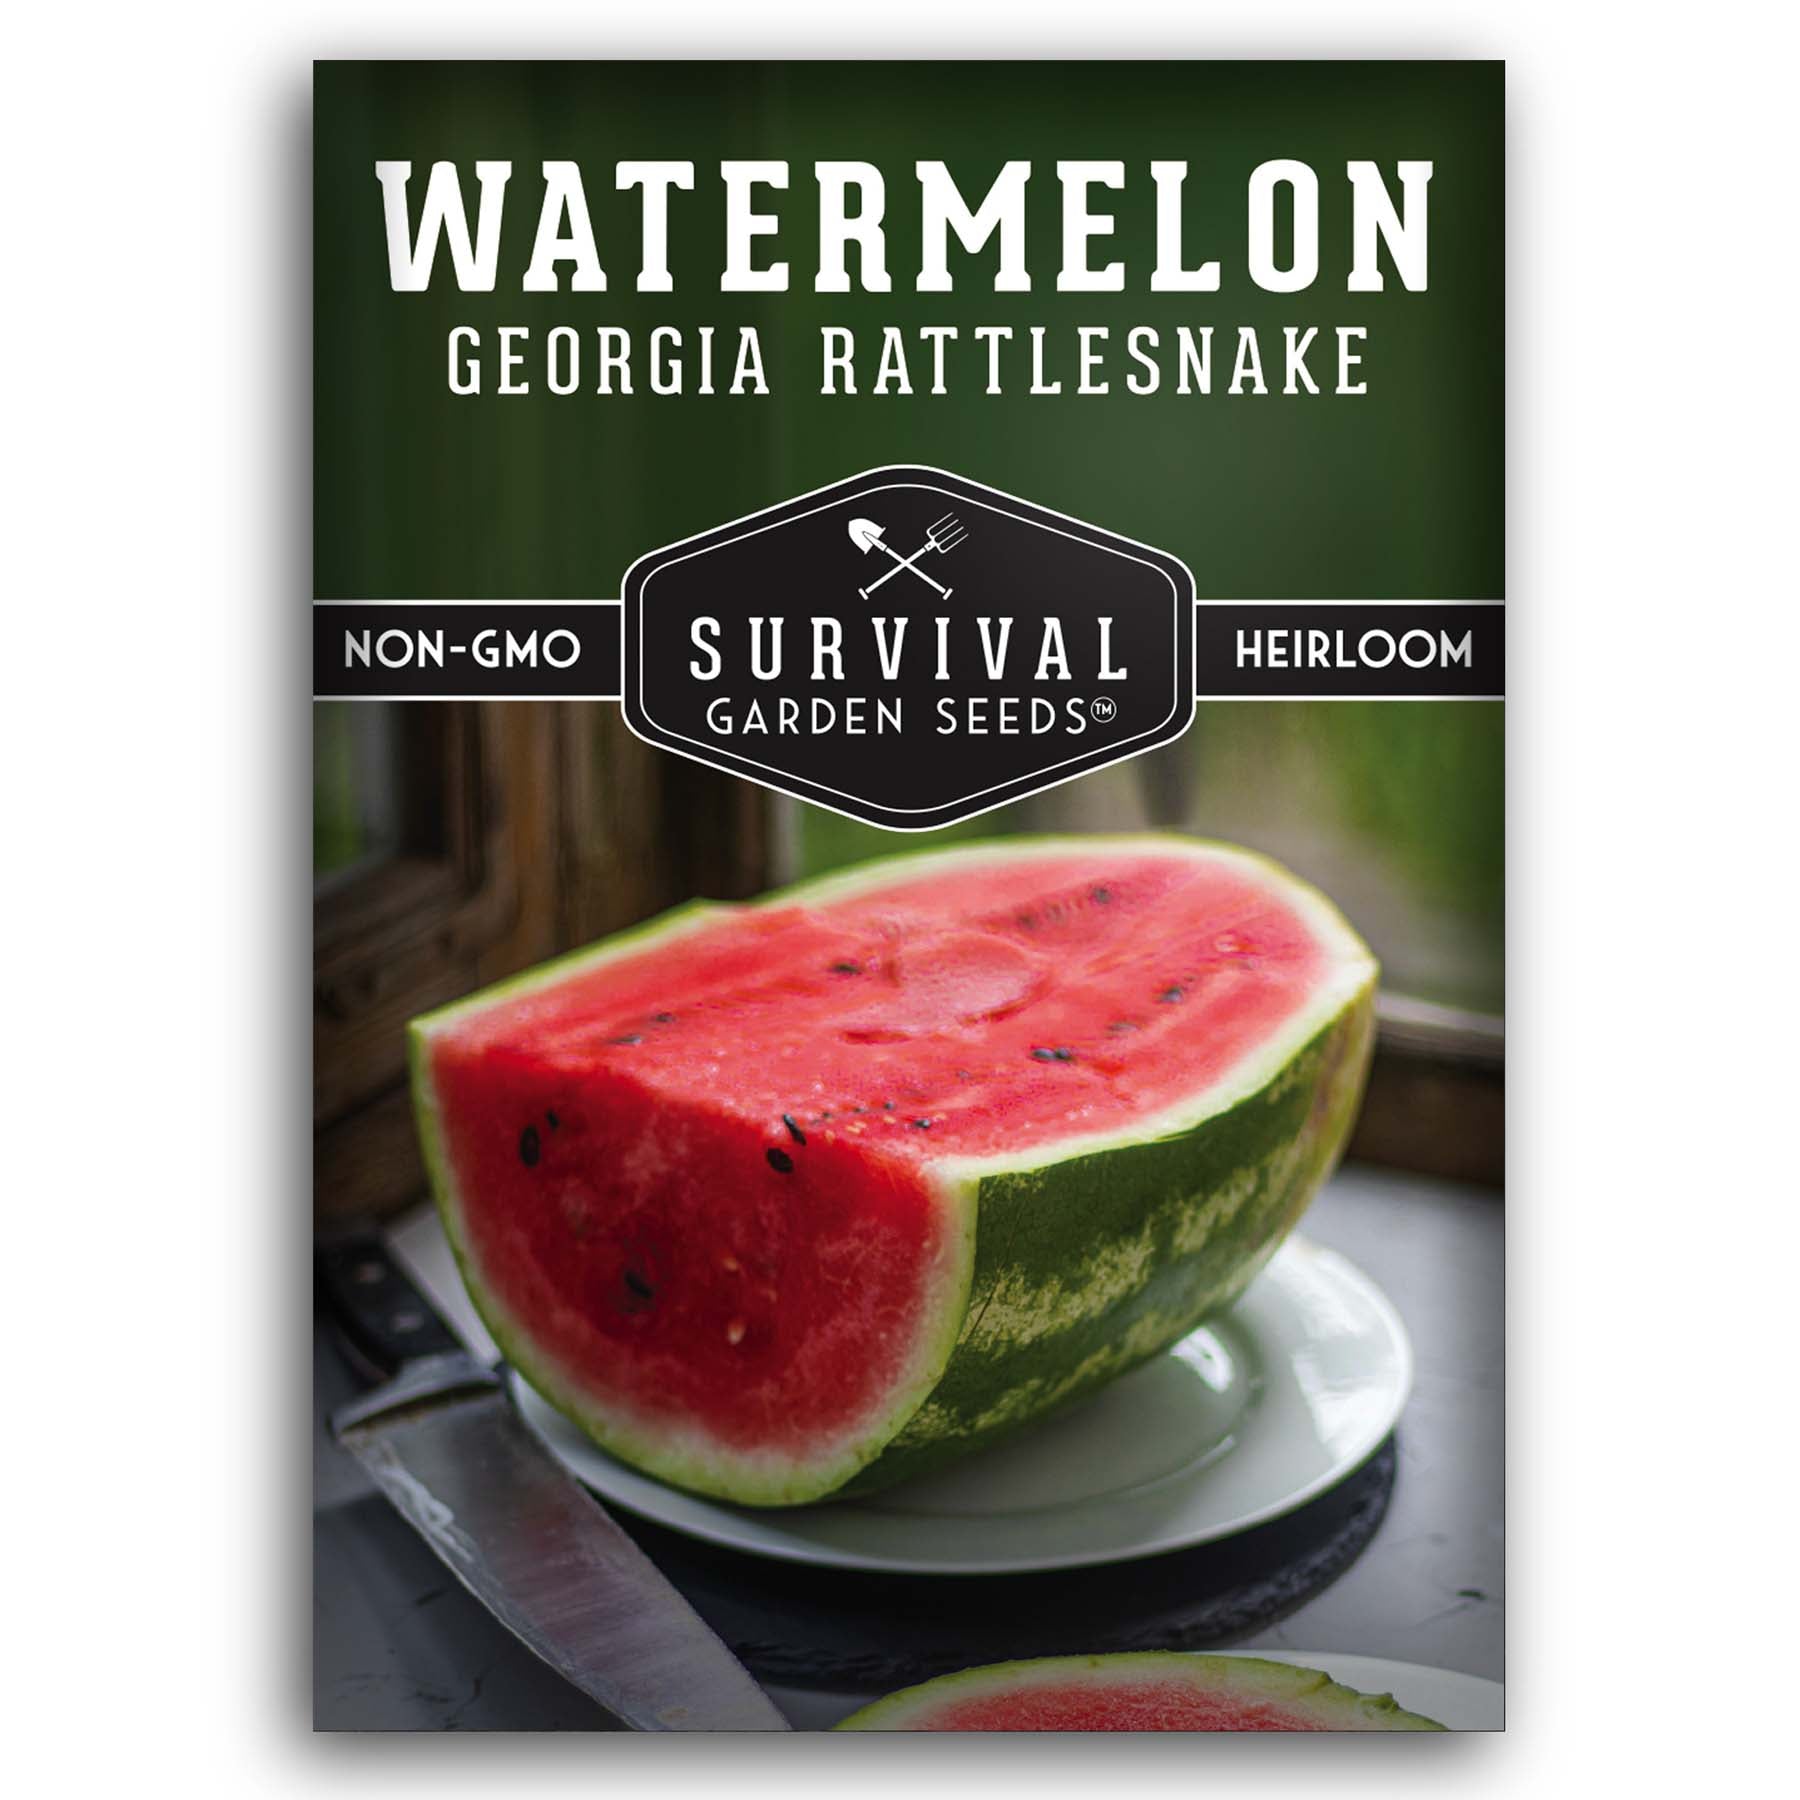 Georgia Rattlesnake Watermelon Seeds